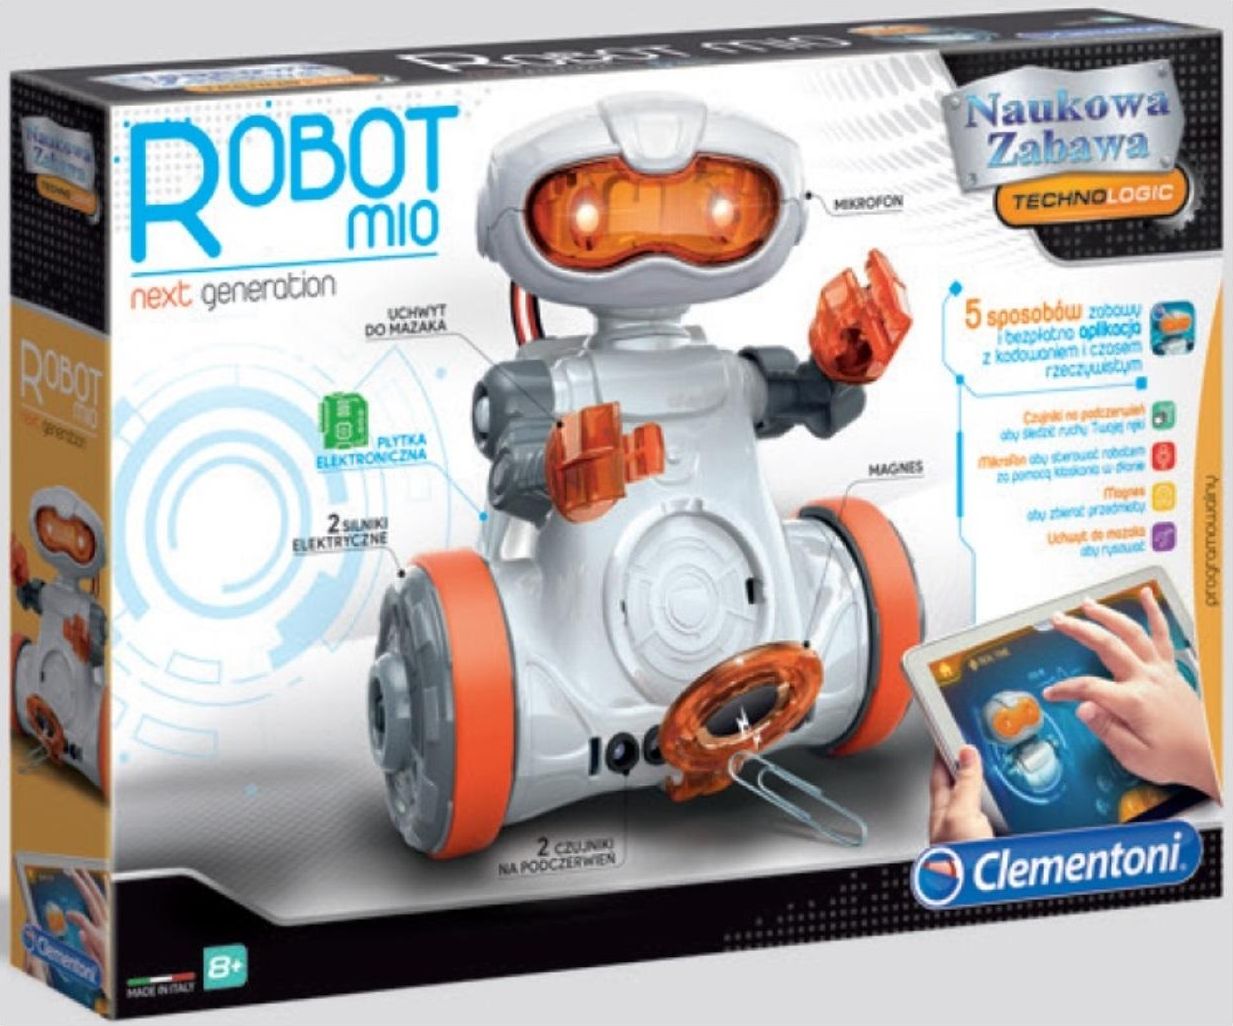 Clementoni Robot Mio new generation (50632) (poļu valodā)